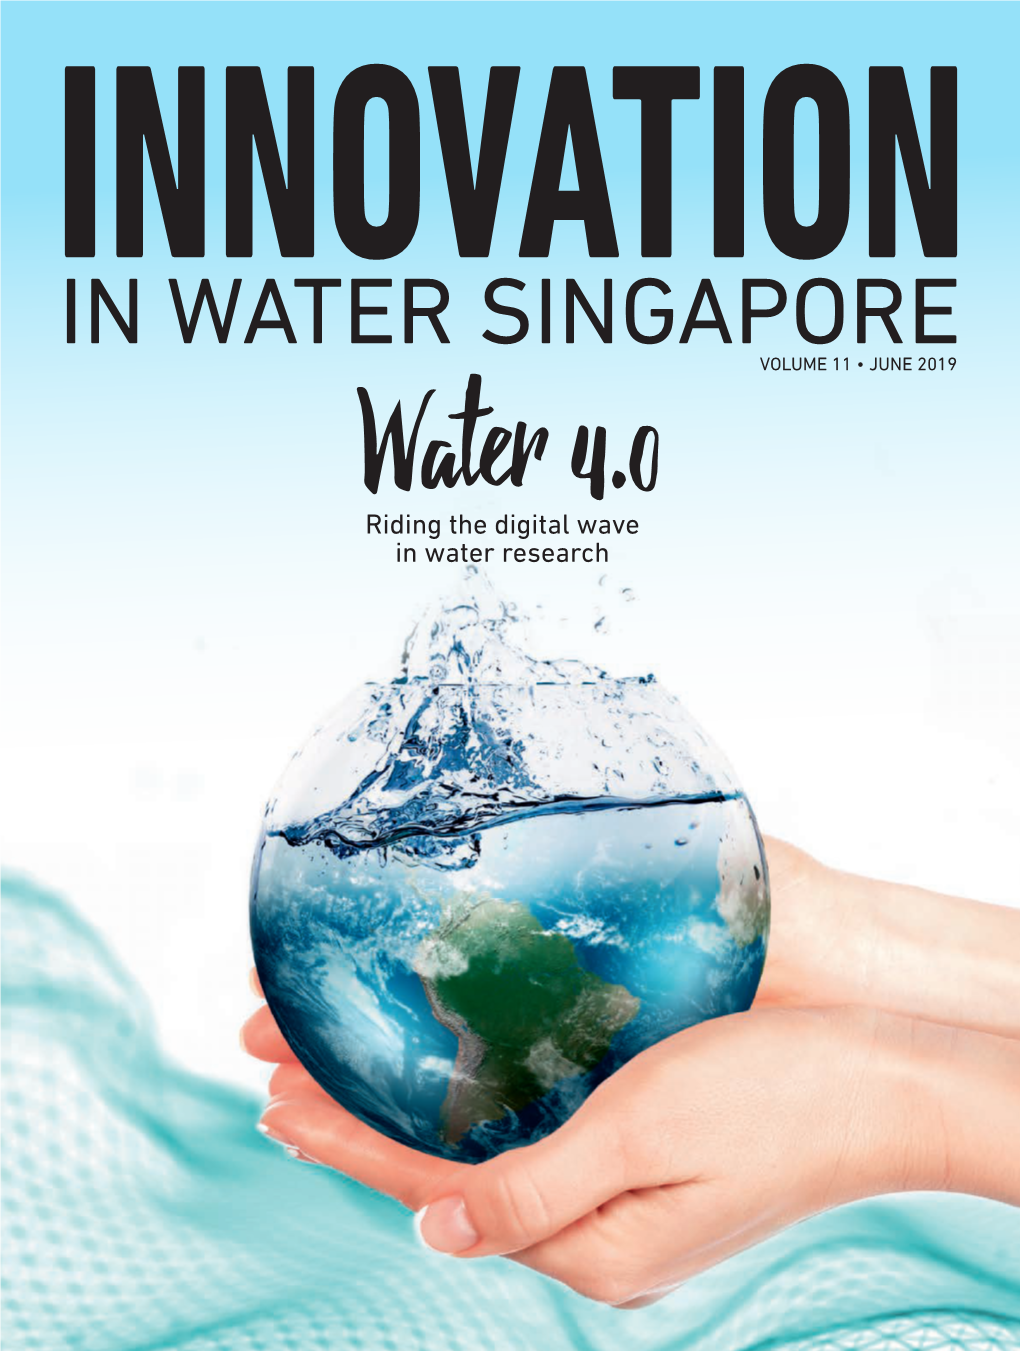 In Water Singapore Volume 11 • June 2019